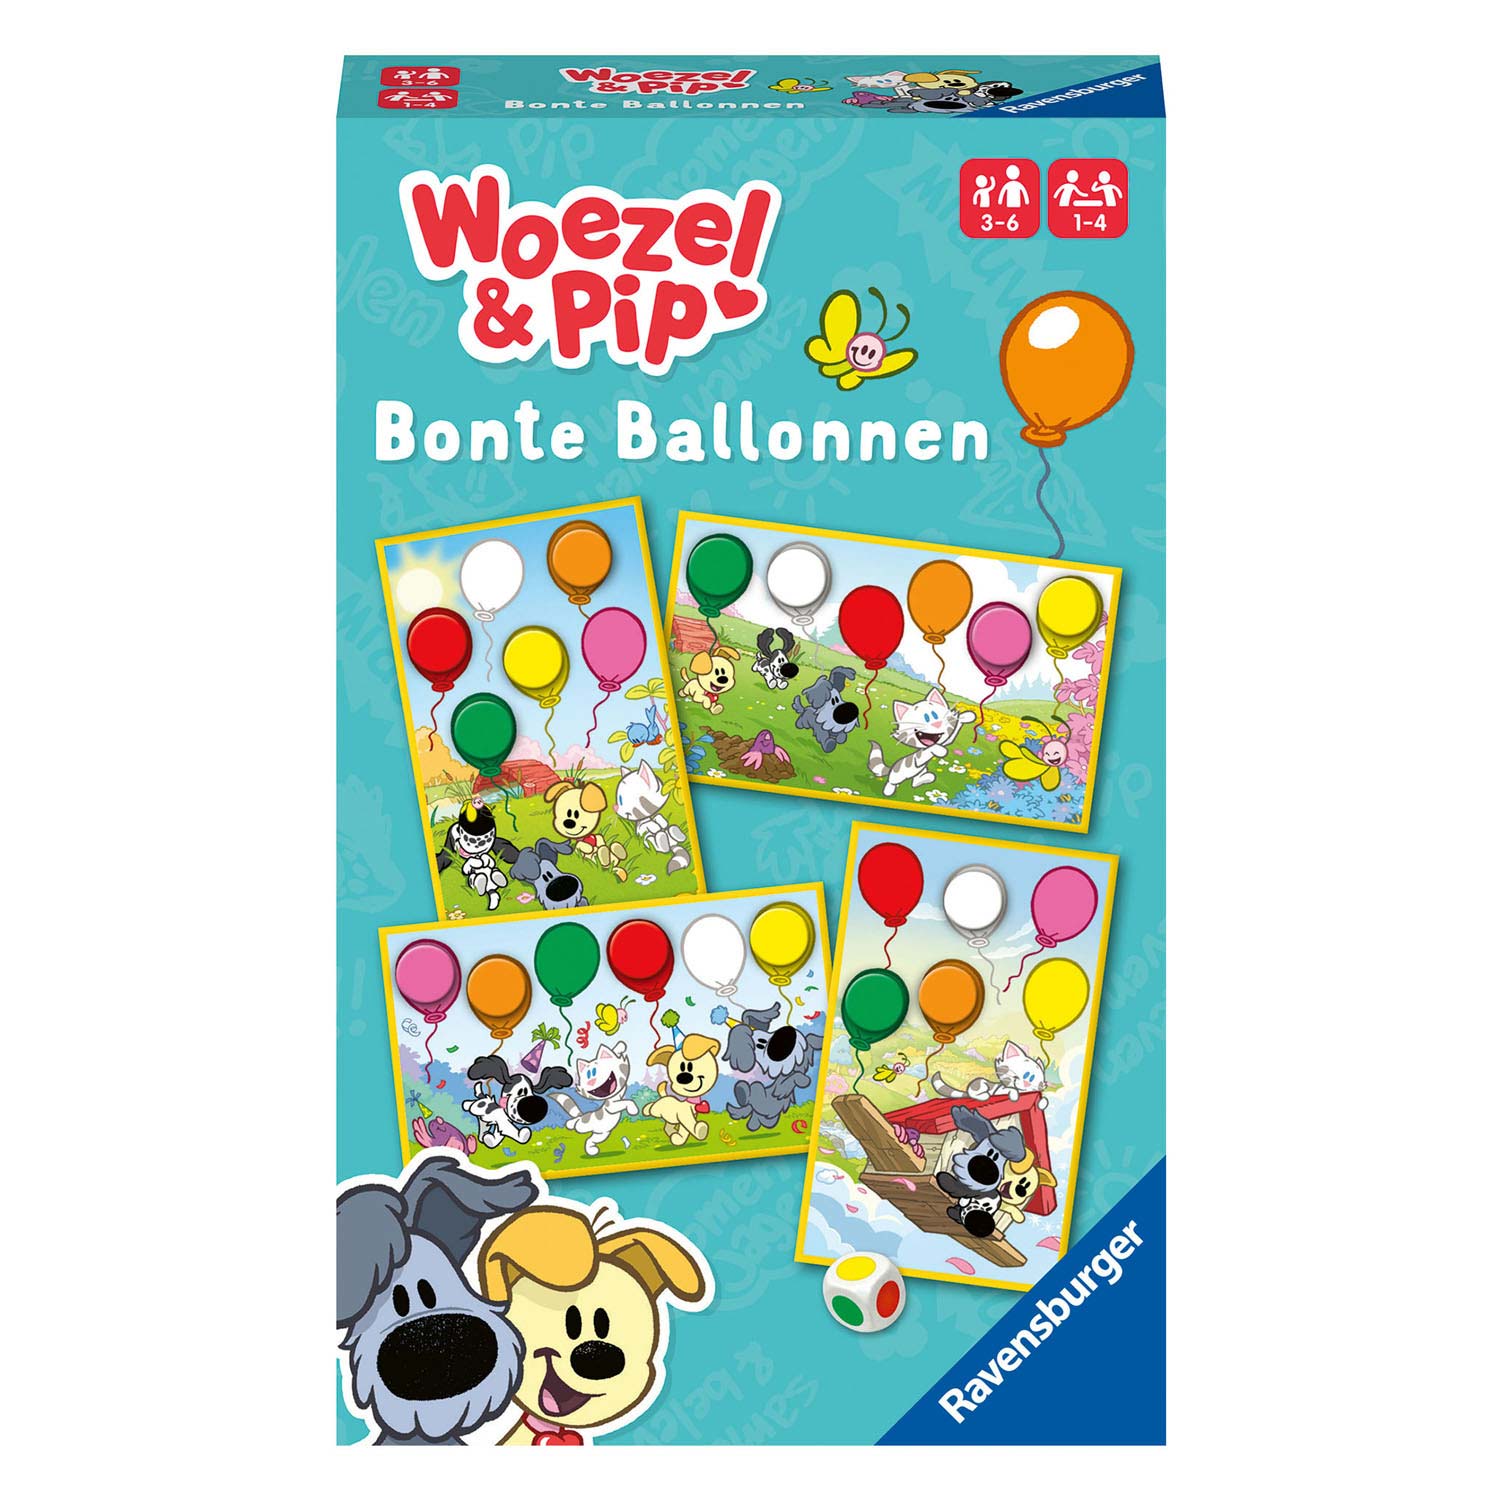 Ravensburger & Pip Bonte ballonnen Kleuren Herkennen Spel